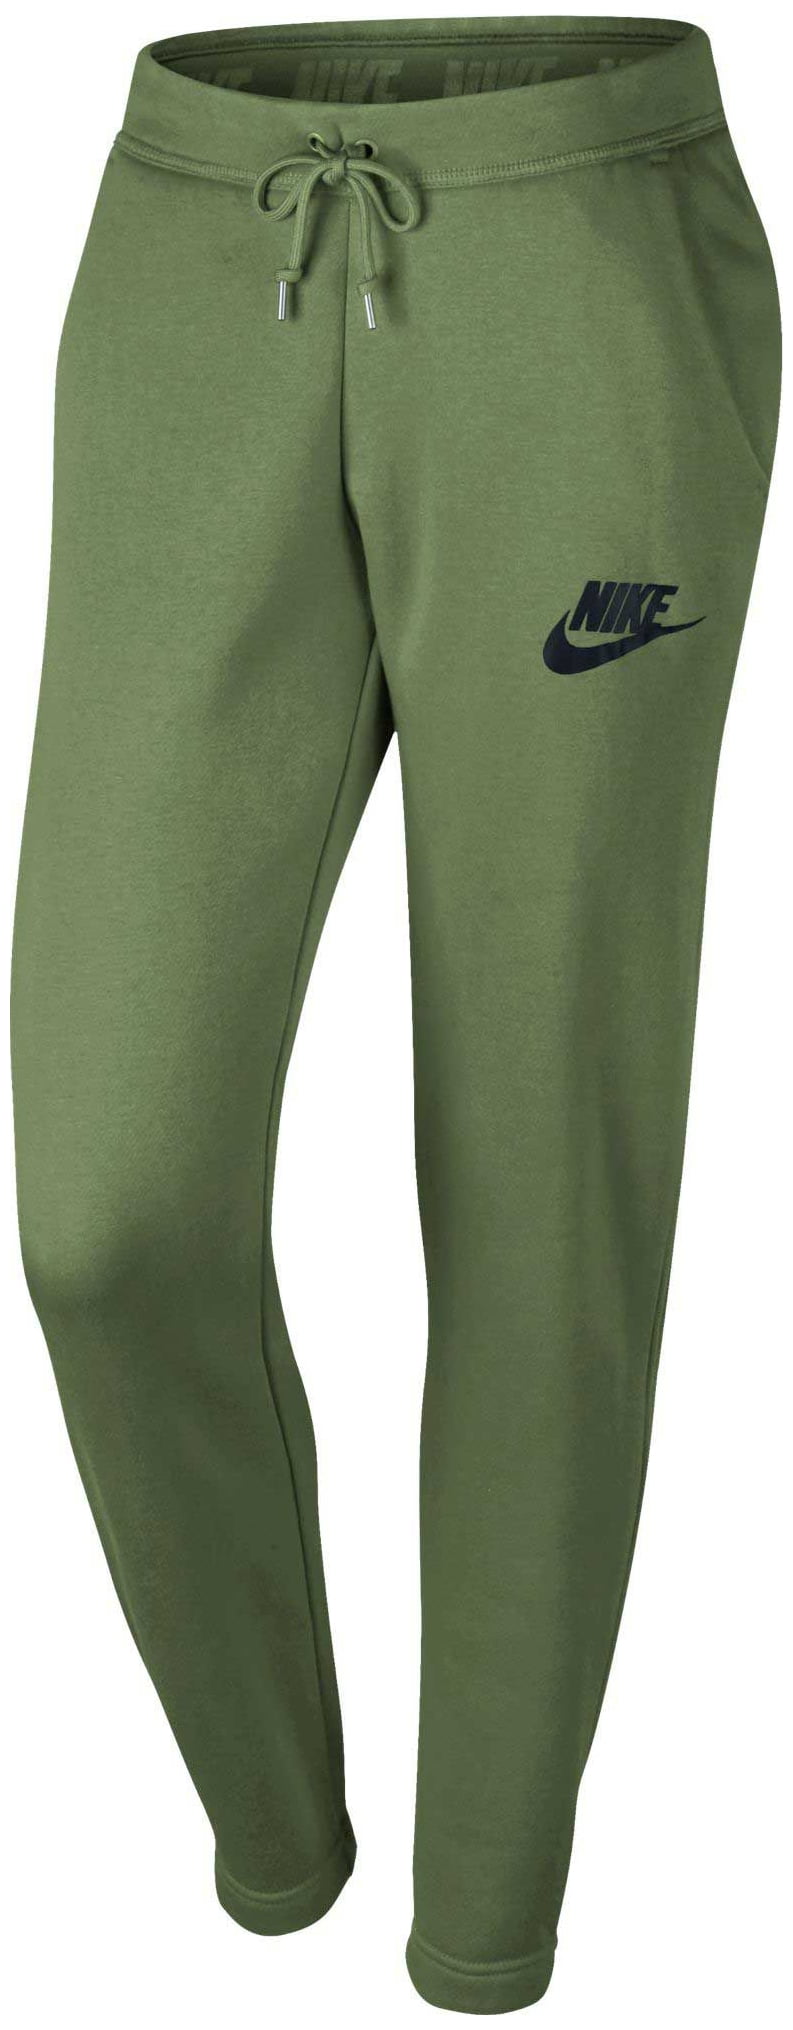 green sweatpants nike